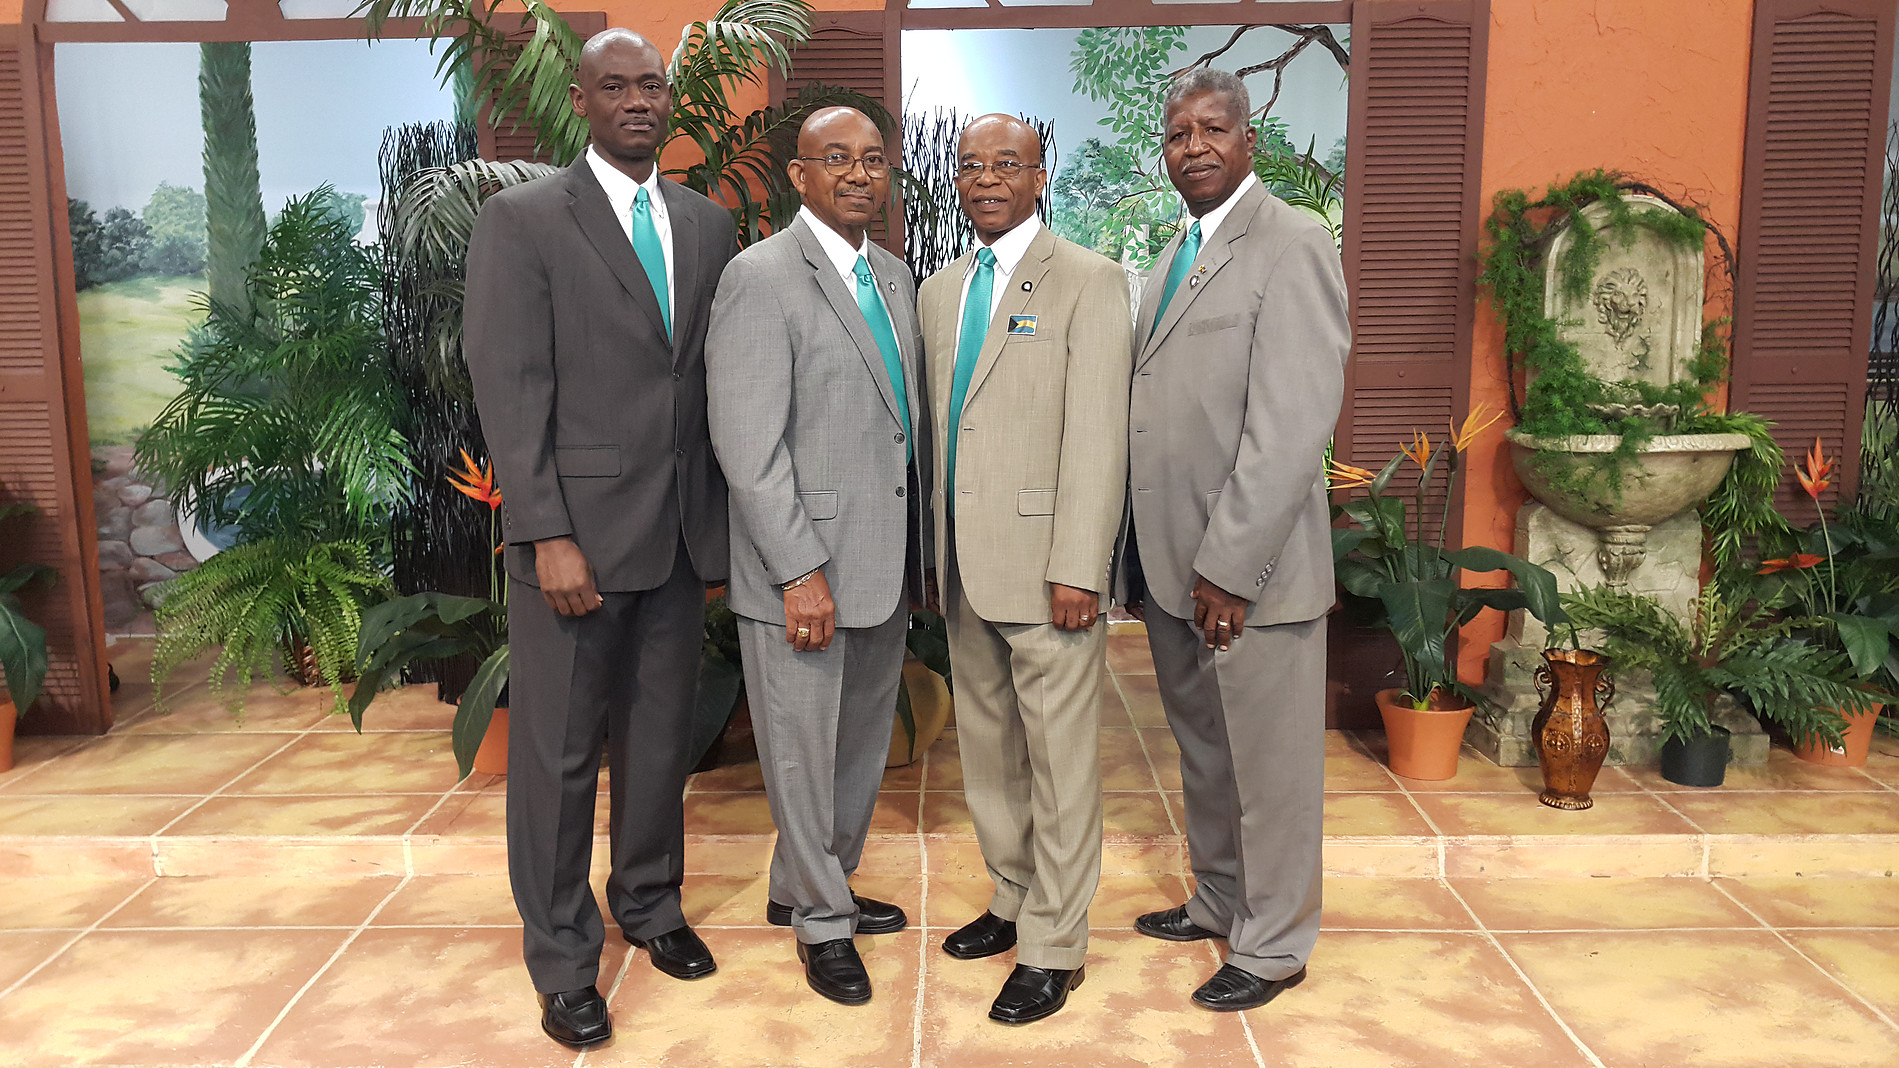 The Island Gospel Quartet